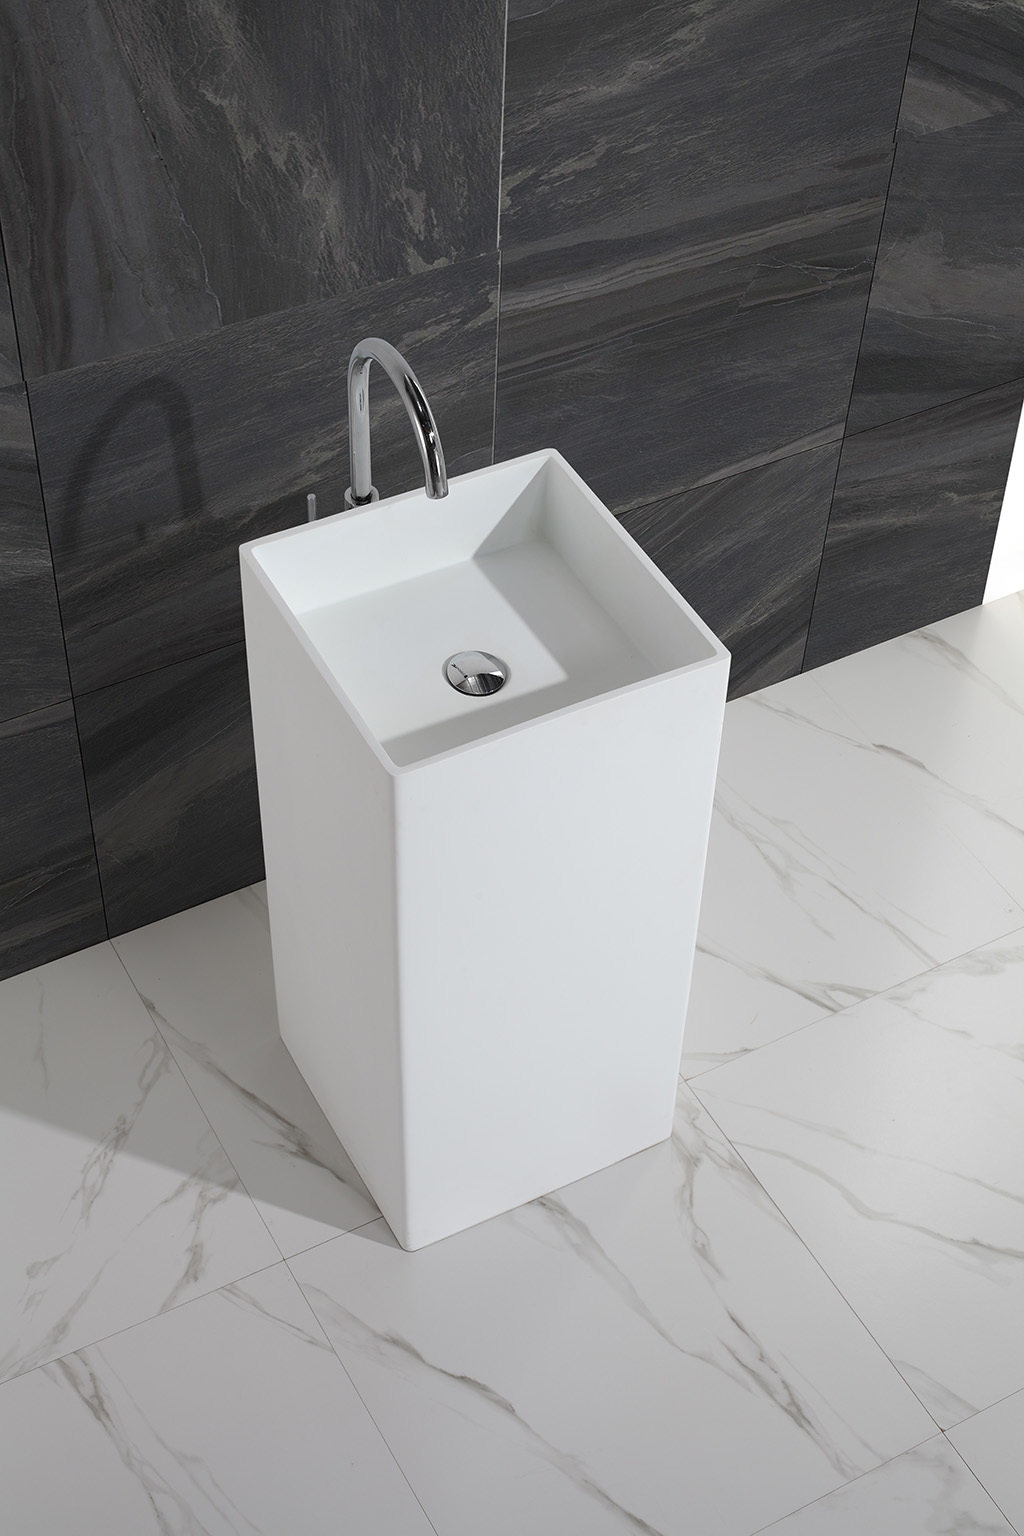 KingKonree Brand marble bathroom free standing basins artificial supplier